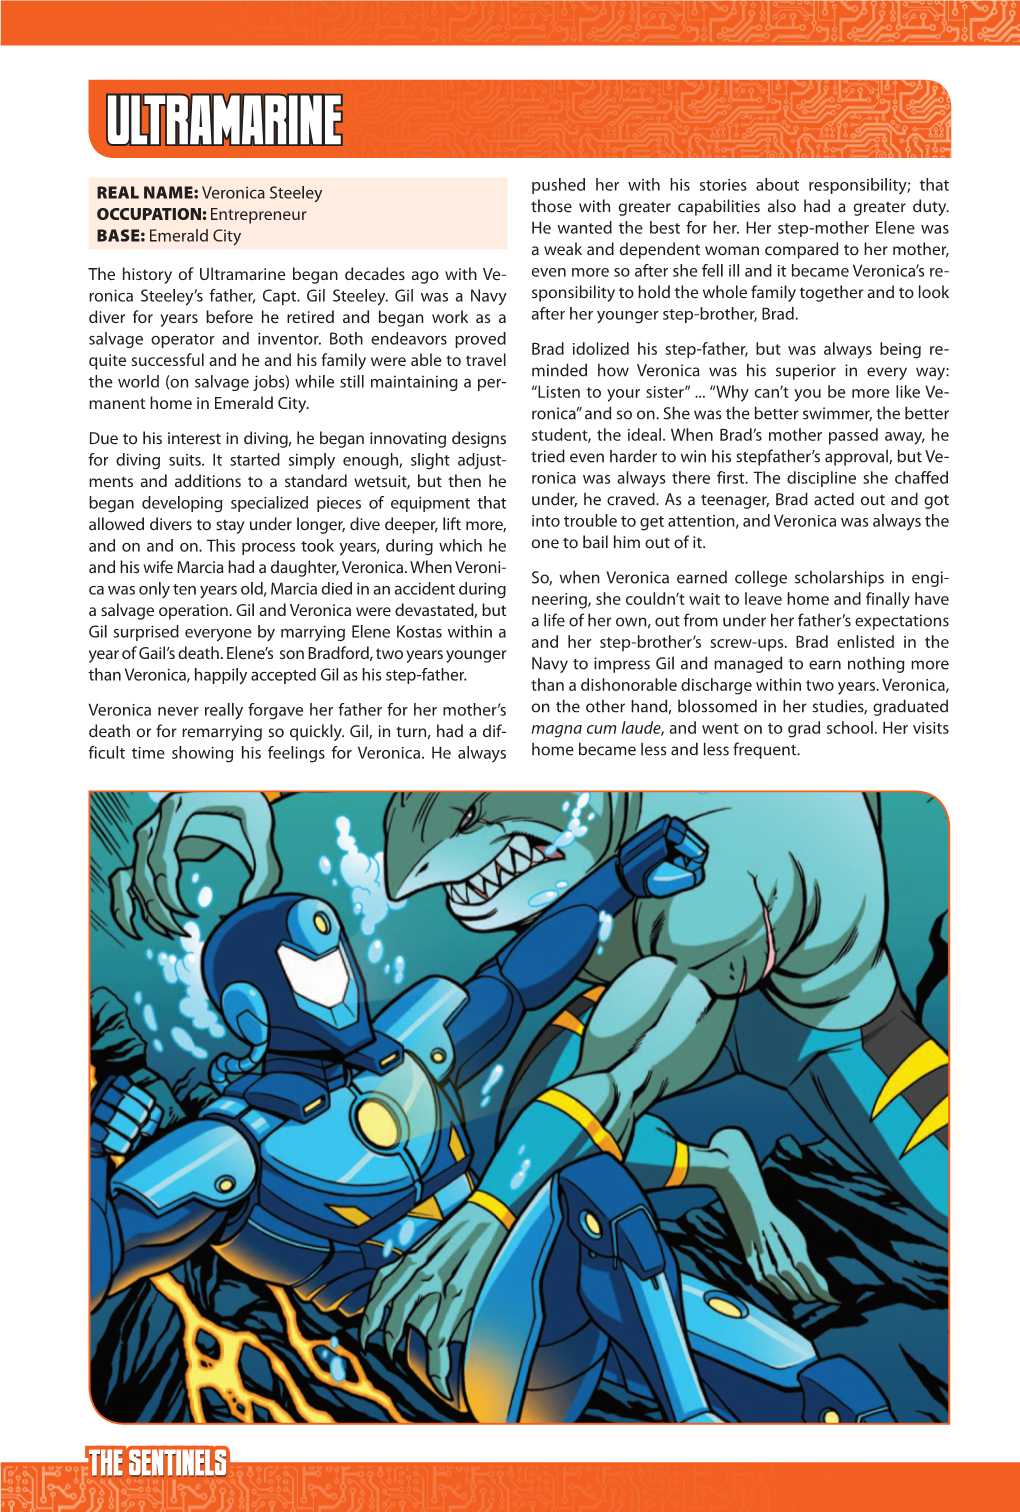 Mutants & Masterminds the Sentinels: Ultramarine